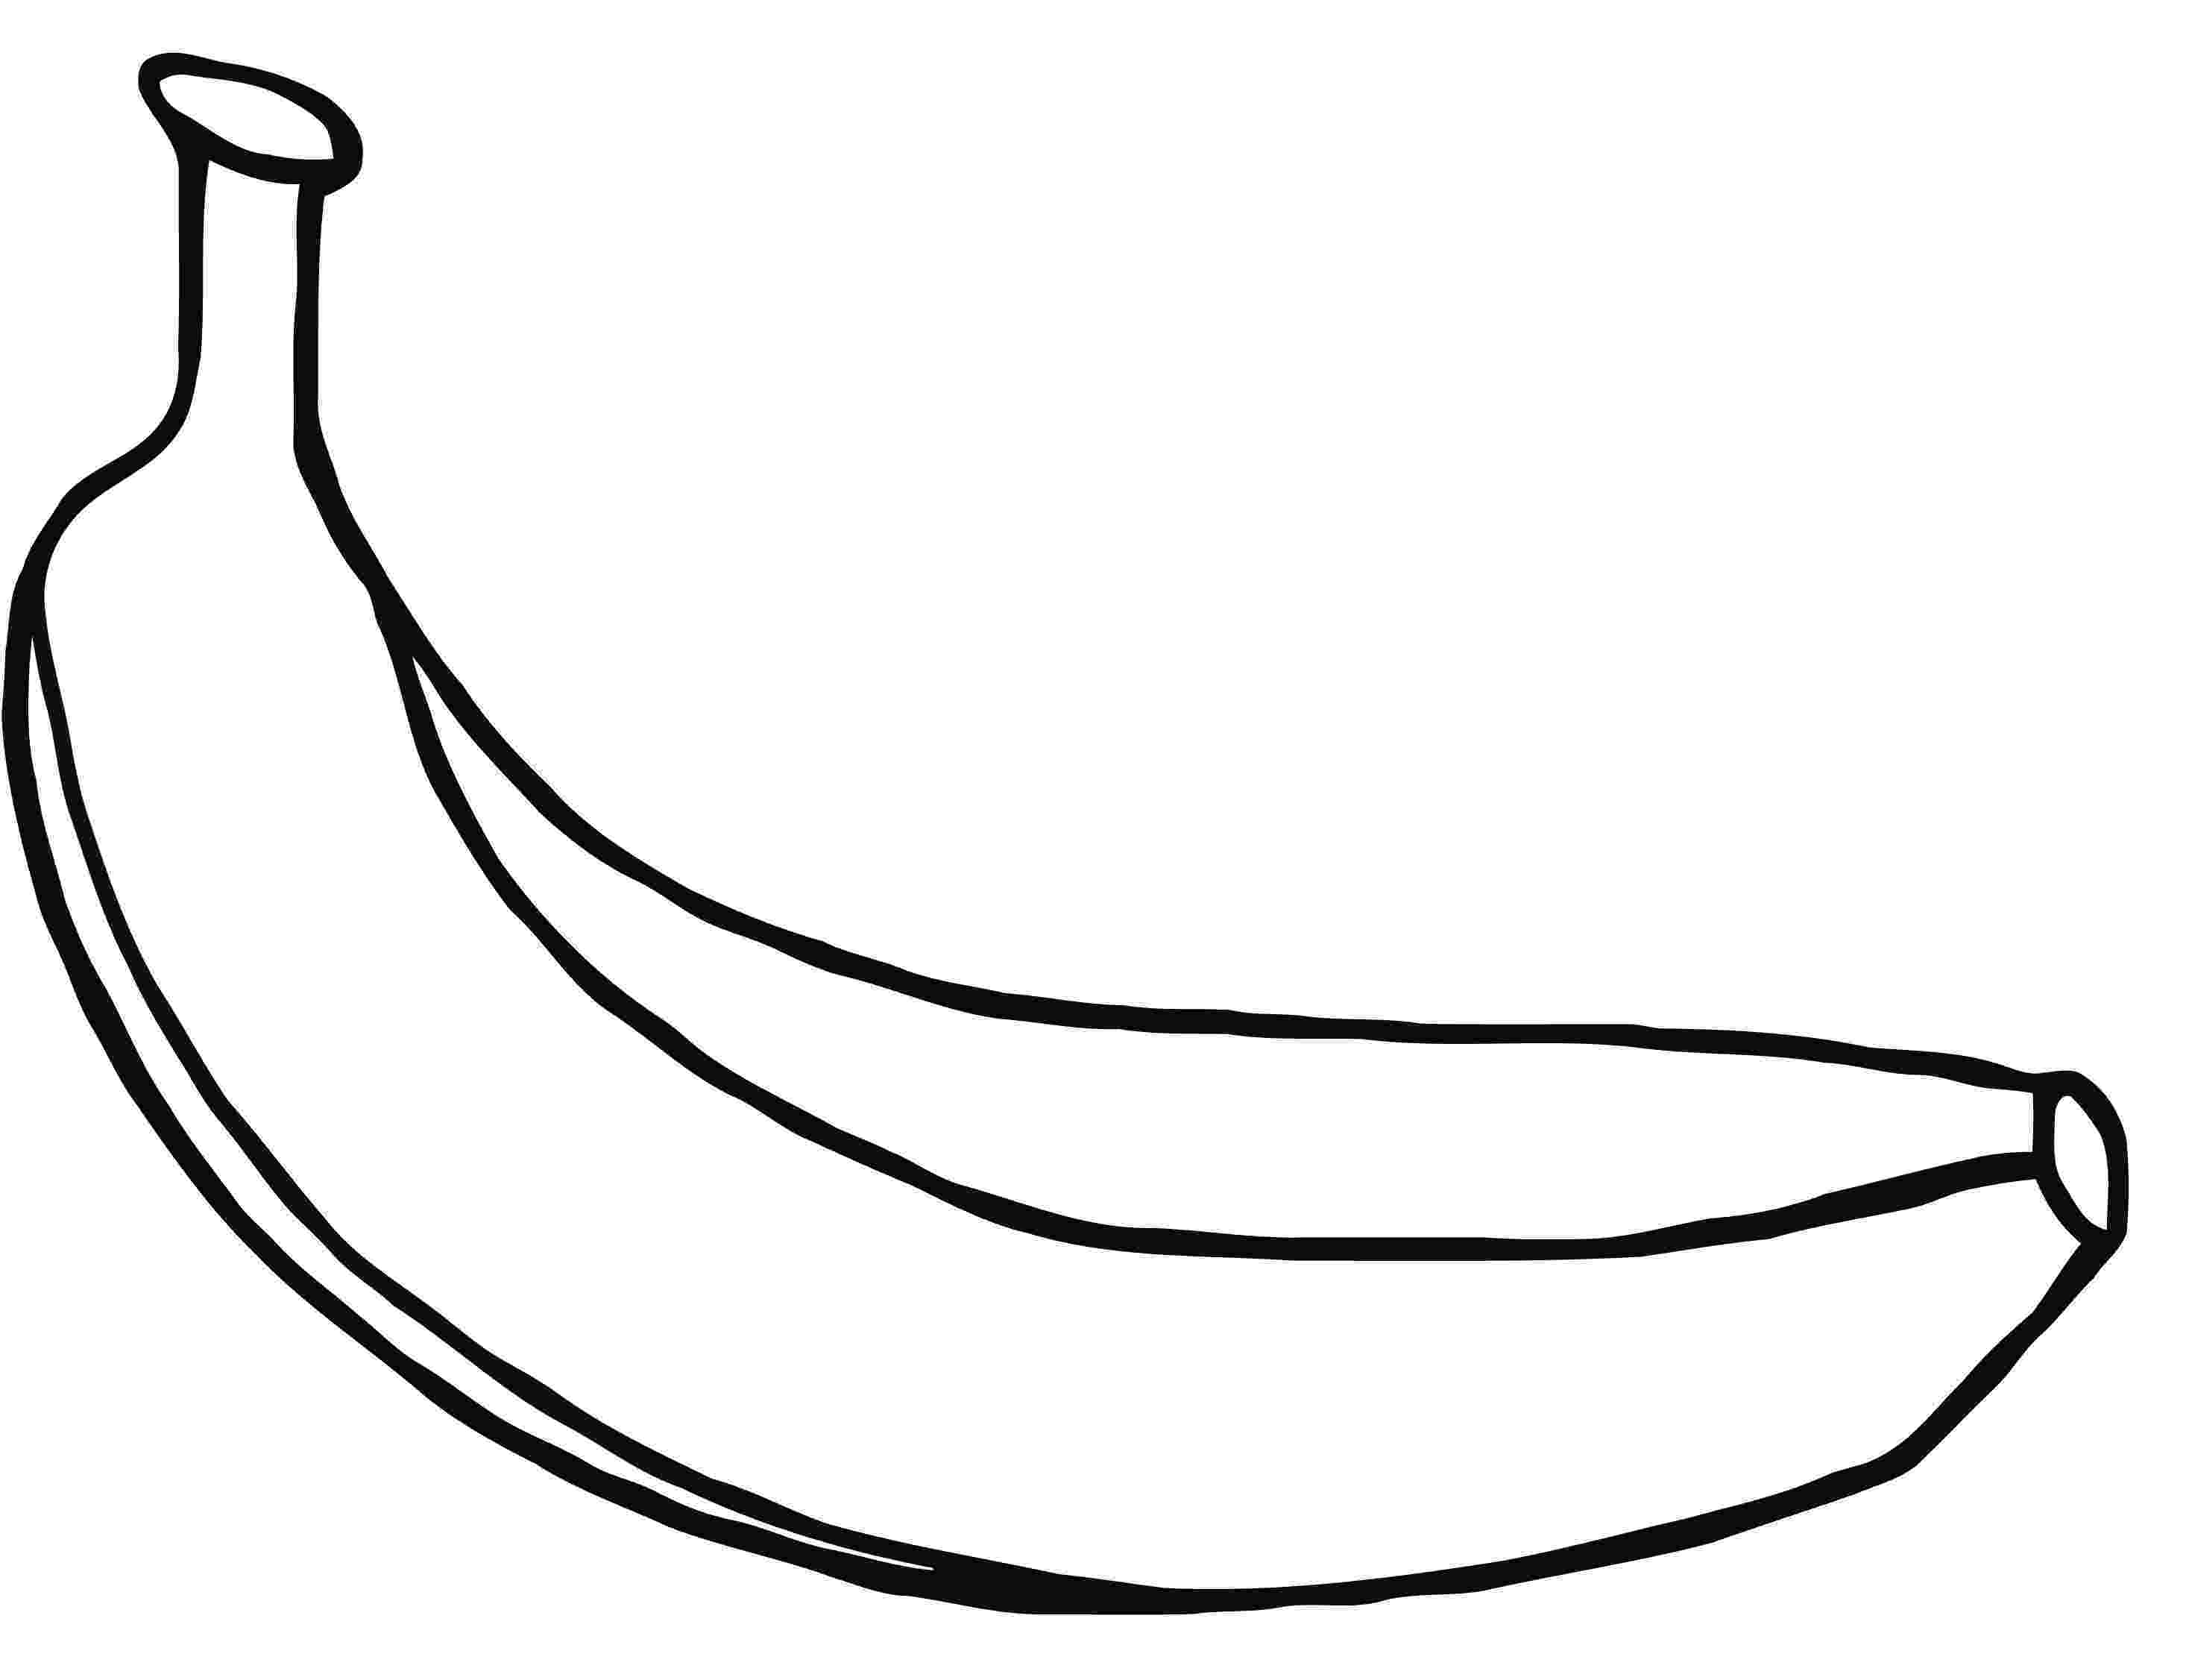 banana template banana pattern use the printable outline for crafts template banana 1 2